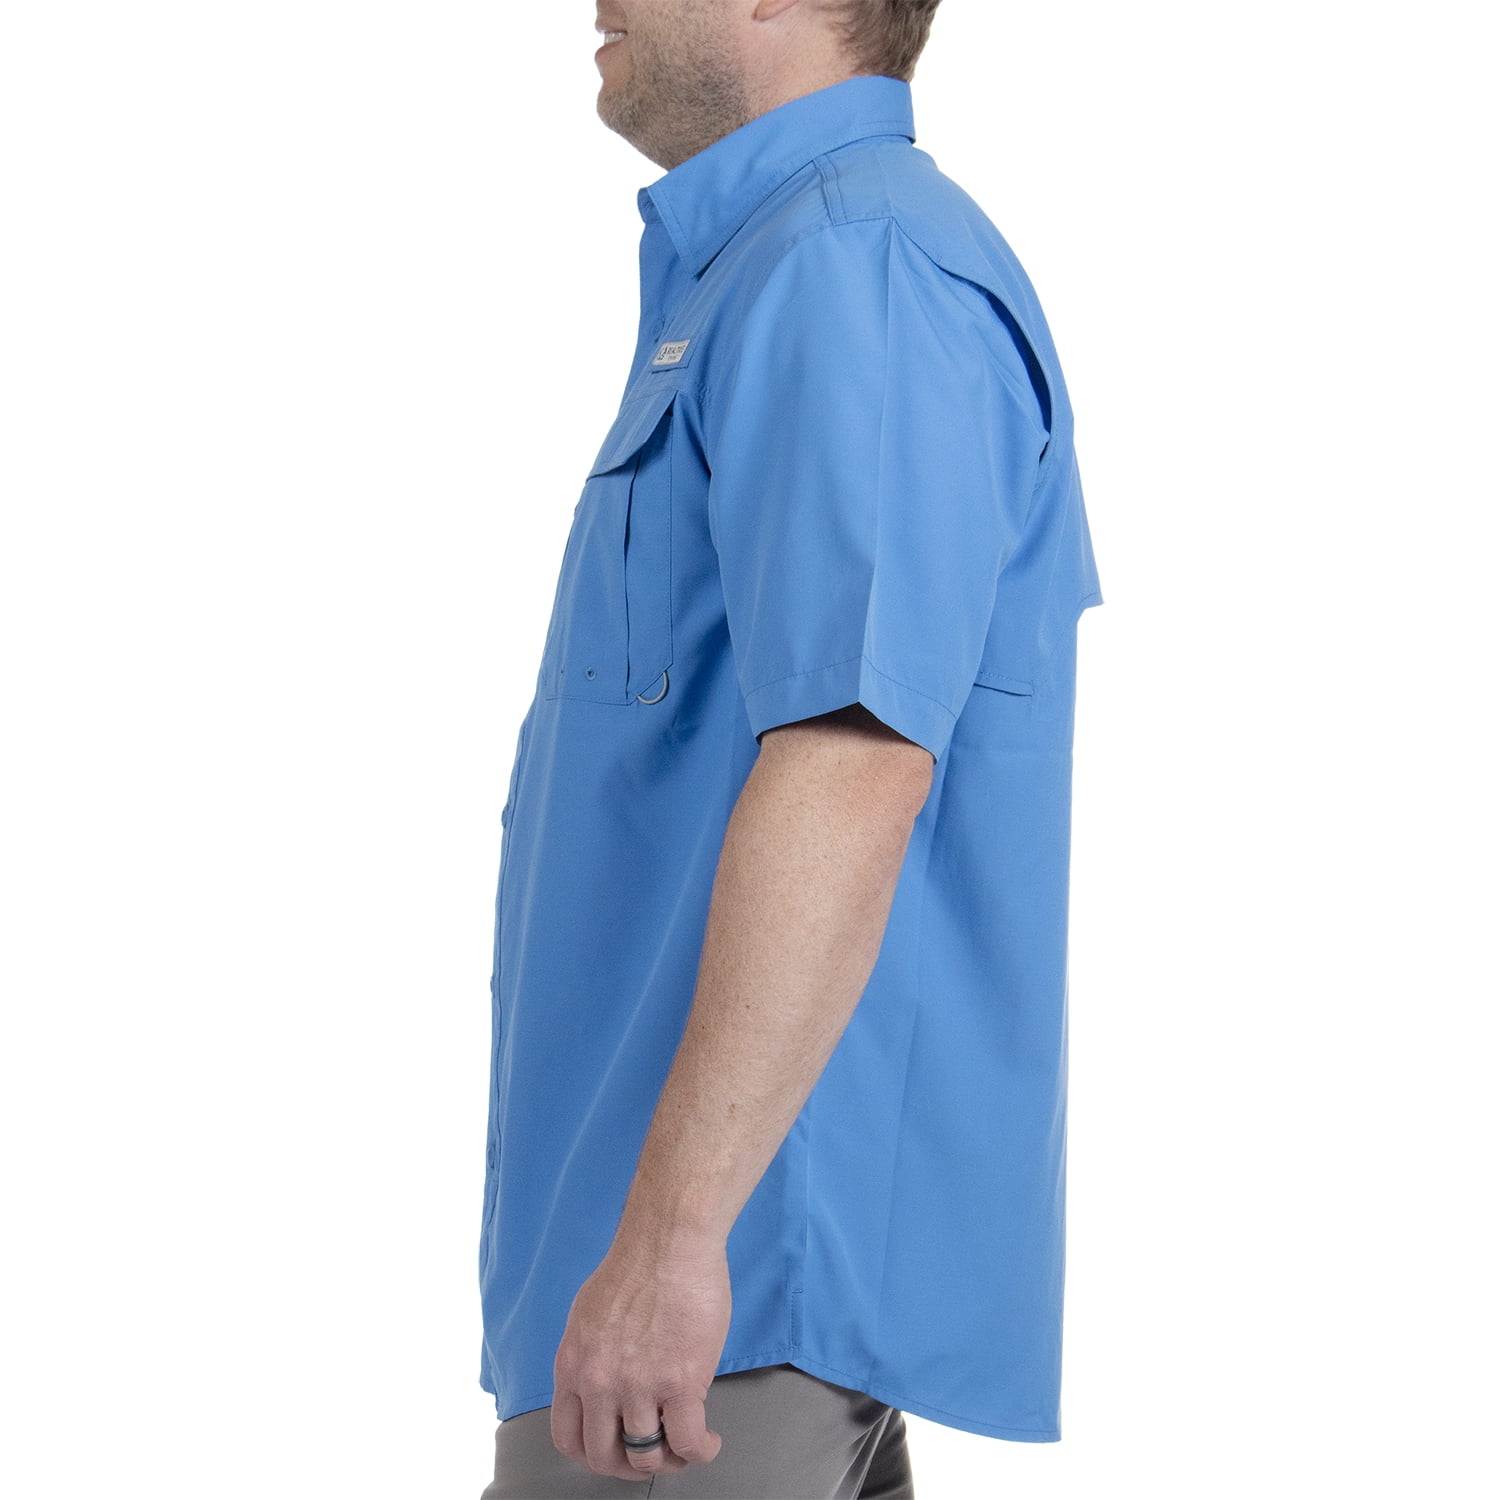 Realtree Short Sleeve Fishing Guide Shirt for Men, Regatta, Size